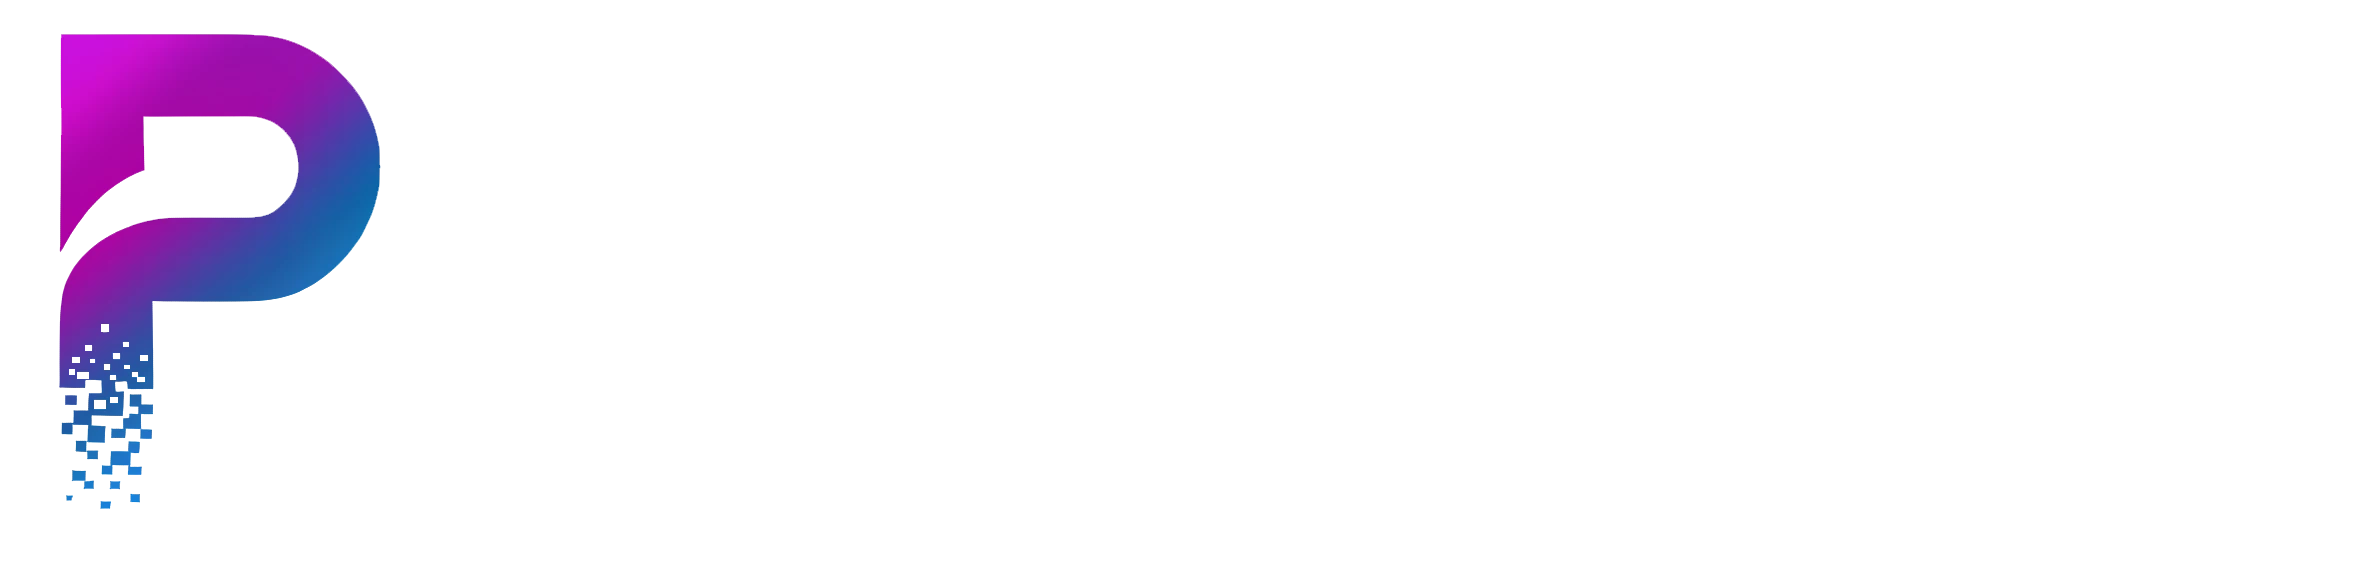 Pixelstars.net